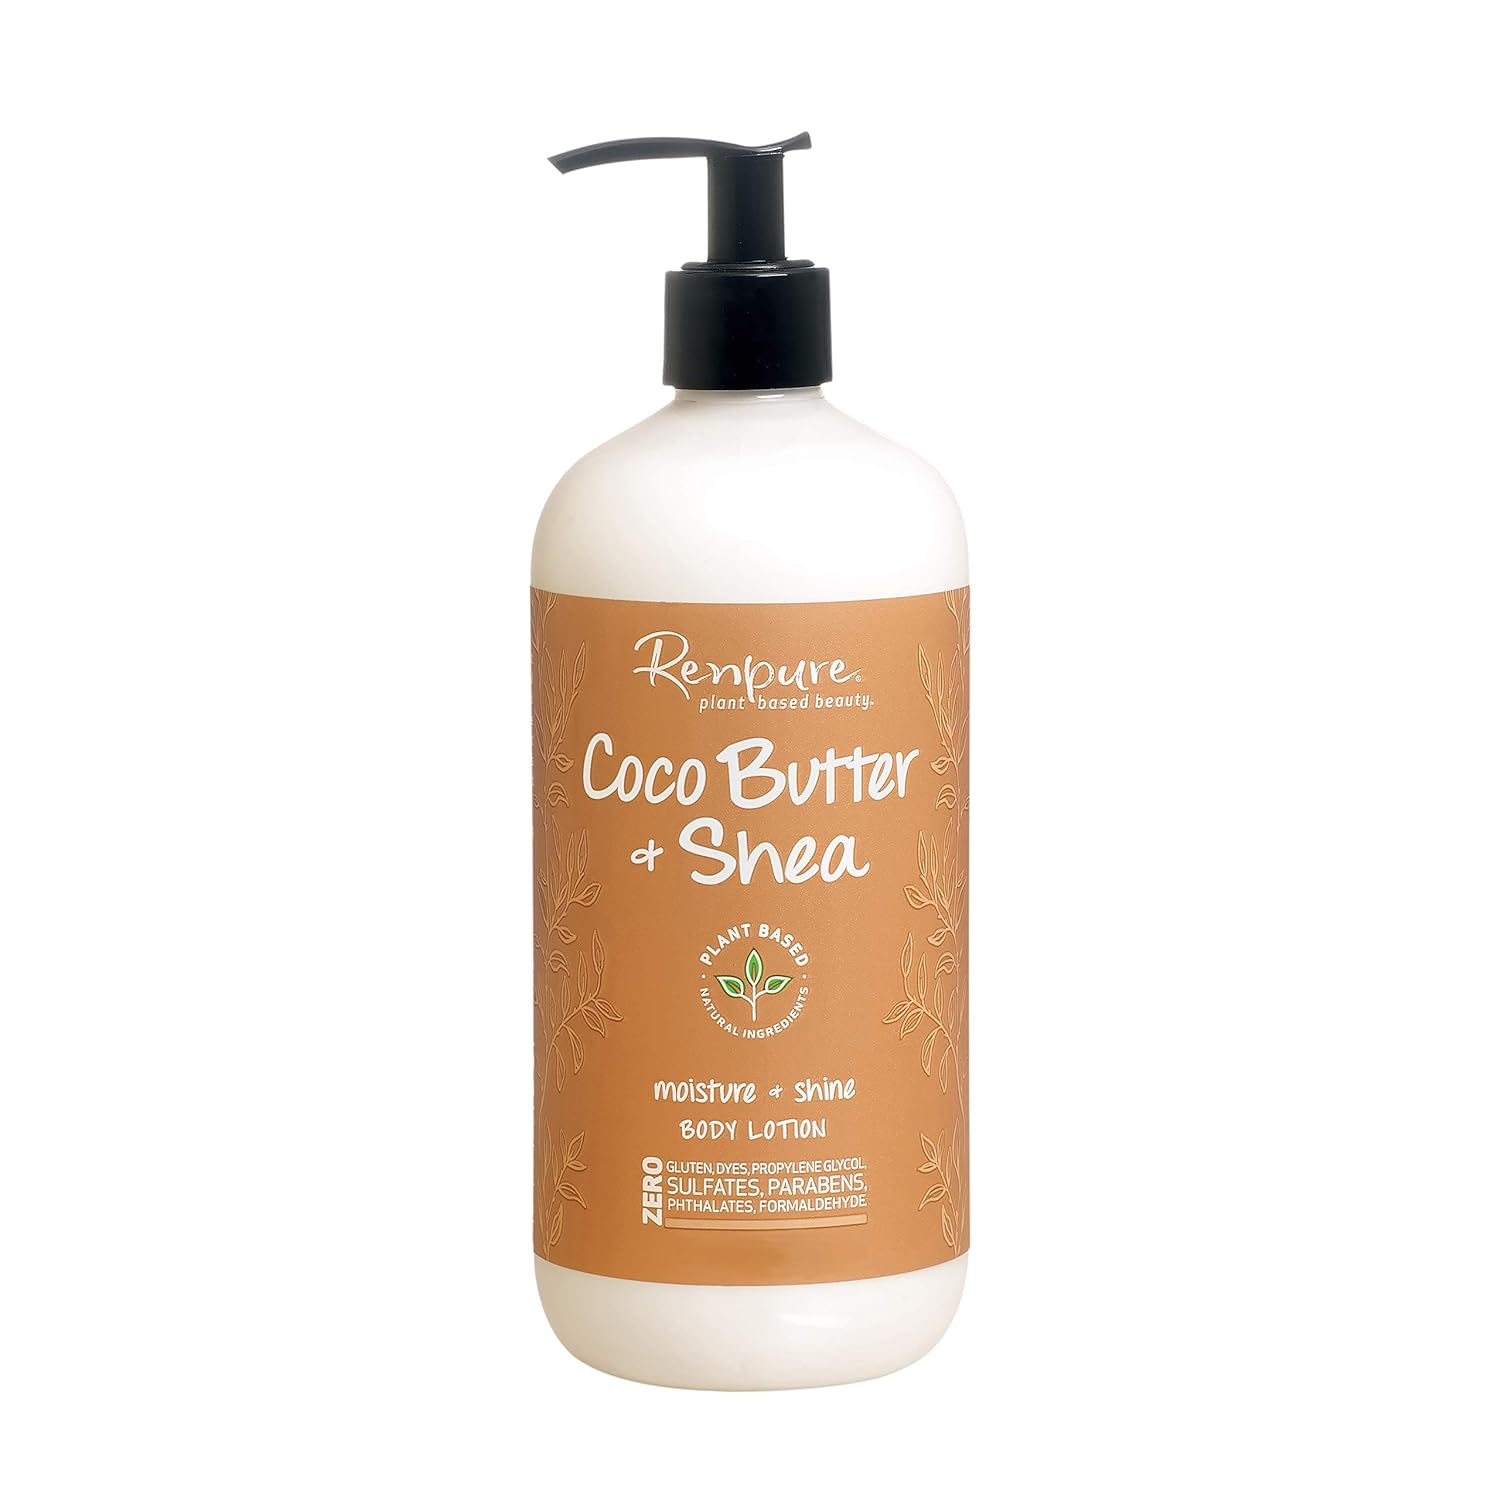 RENPURE PlantBased Beauty Coco Butter Shea Moisture + Shine Body Lotion Fluid, 19 Ounce